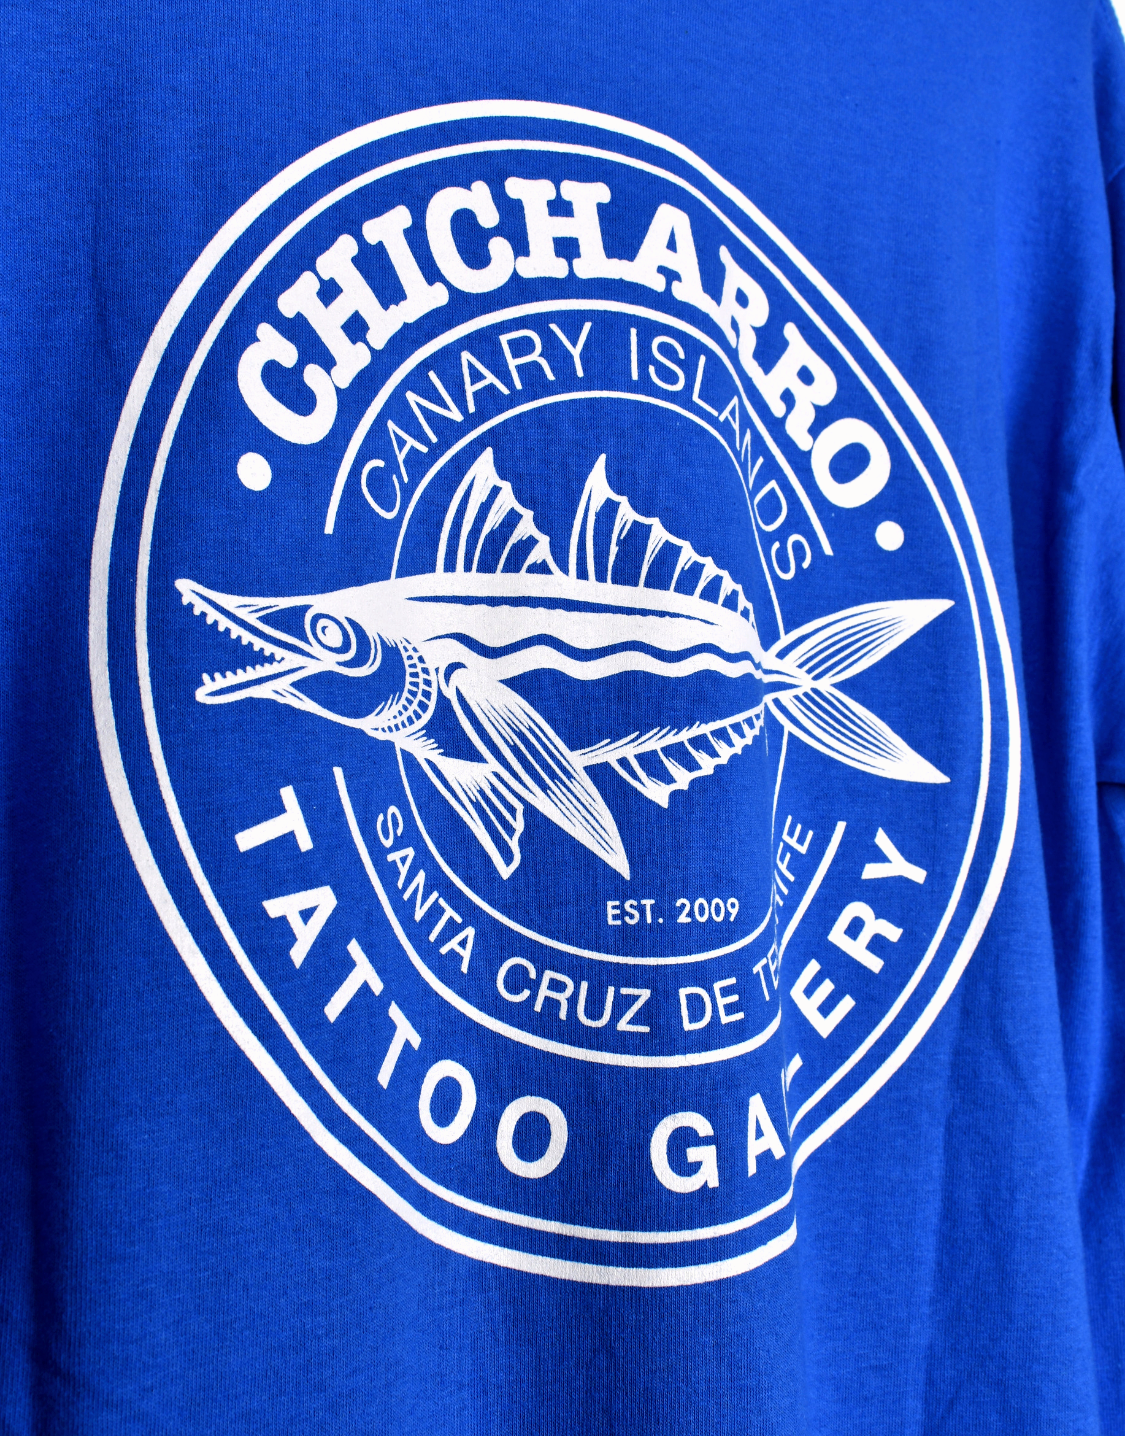 Camiseta Chicharro azul | Chicharro Tattoo Gallery | Estudio de tatuajes Tenerife